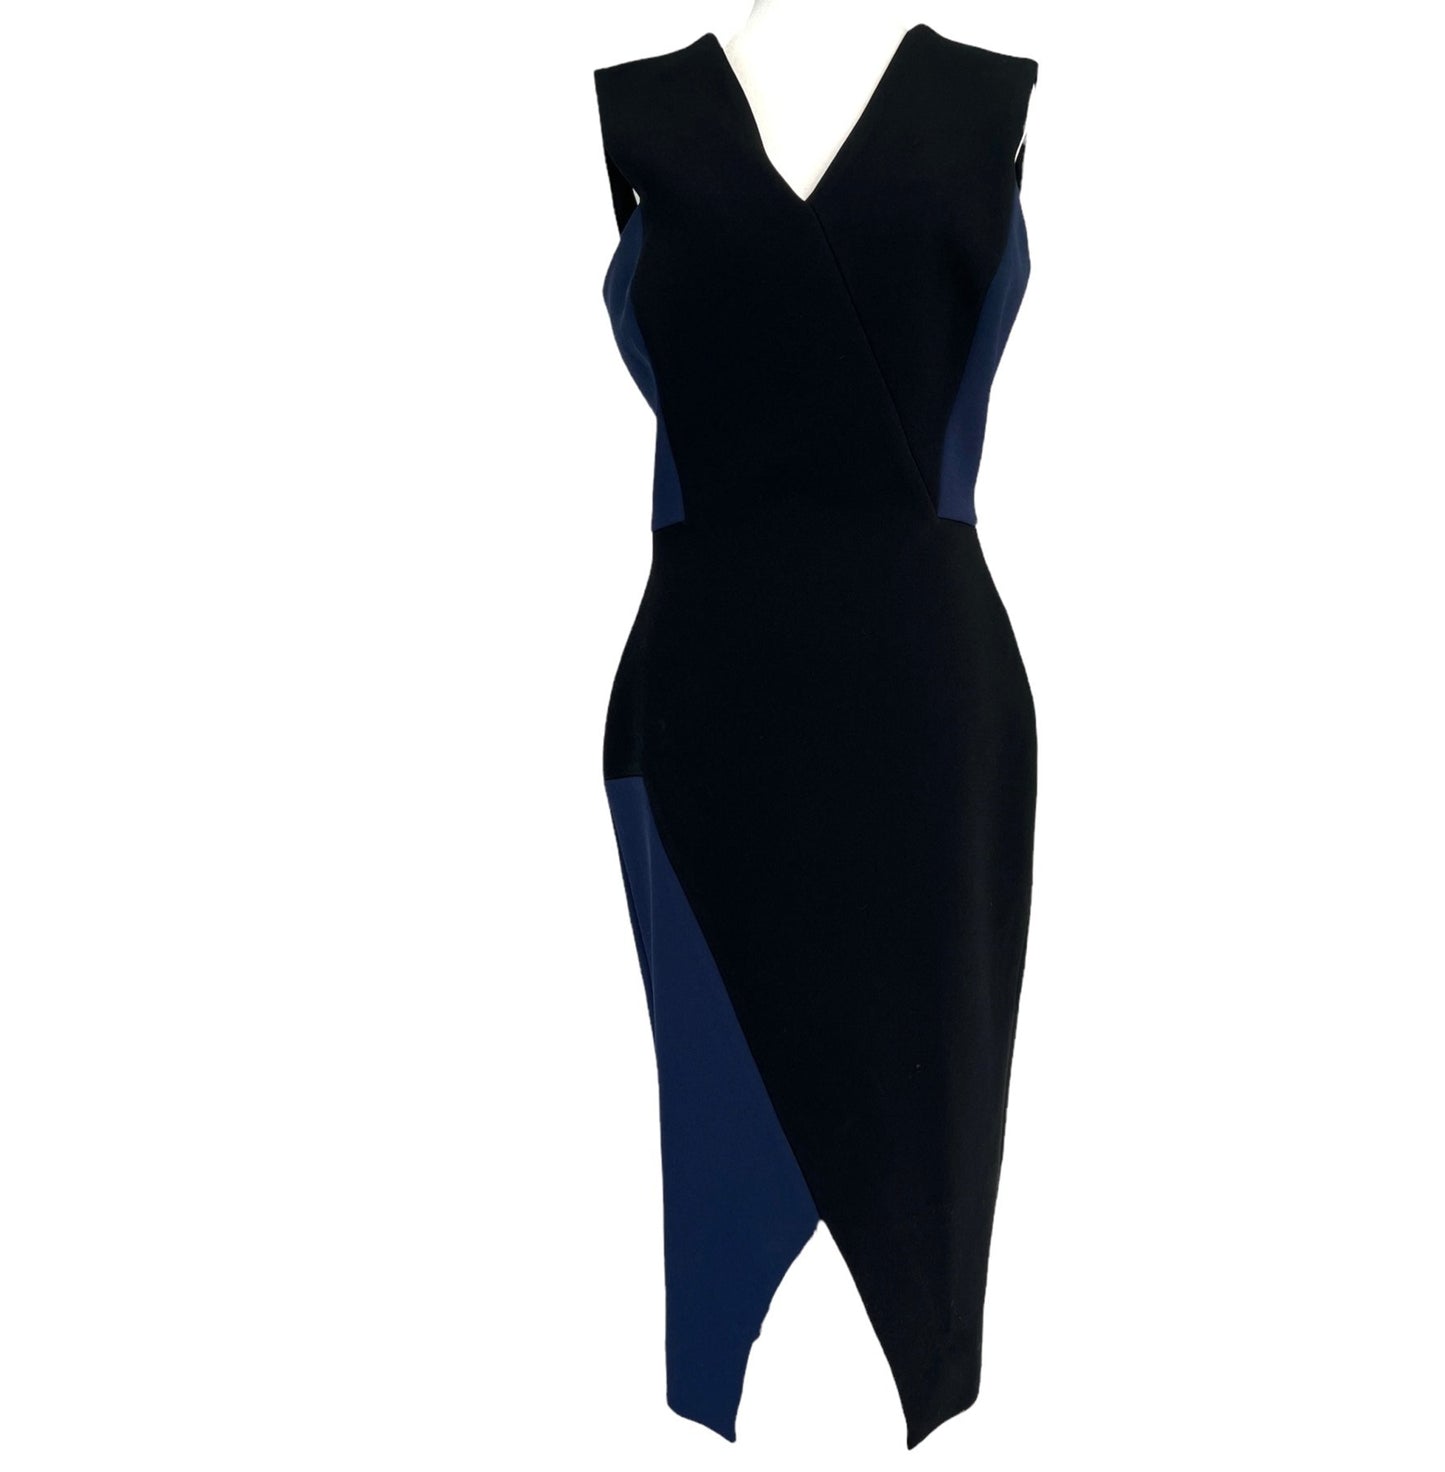 Black & Blue Dress - 8